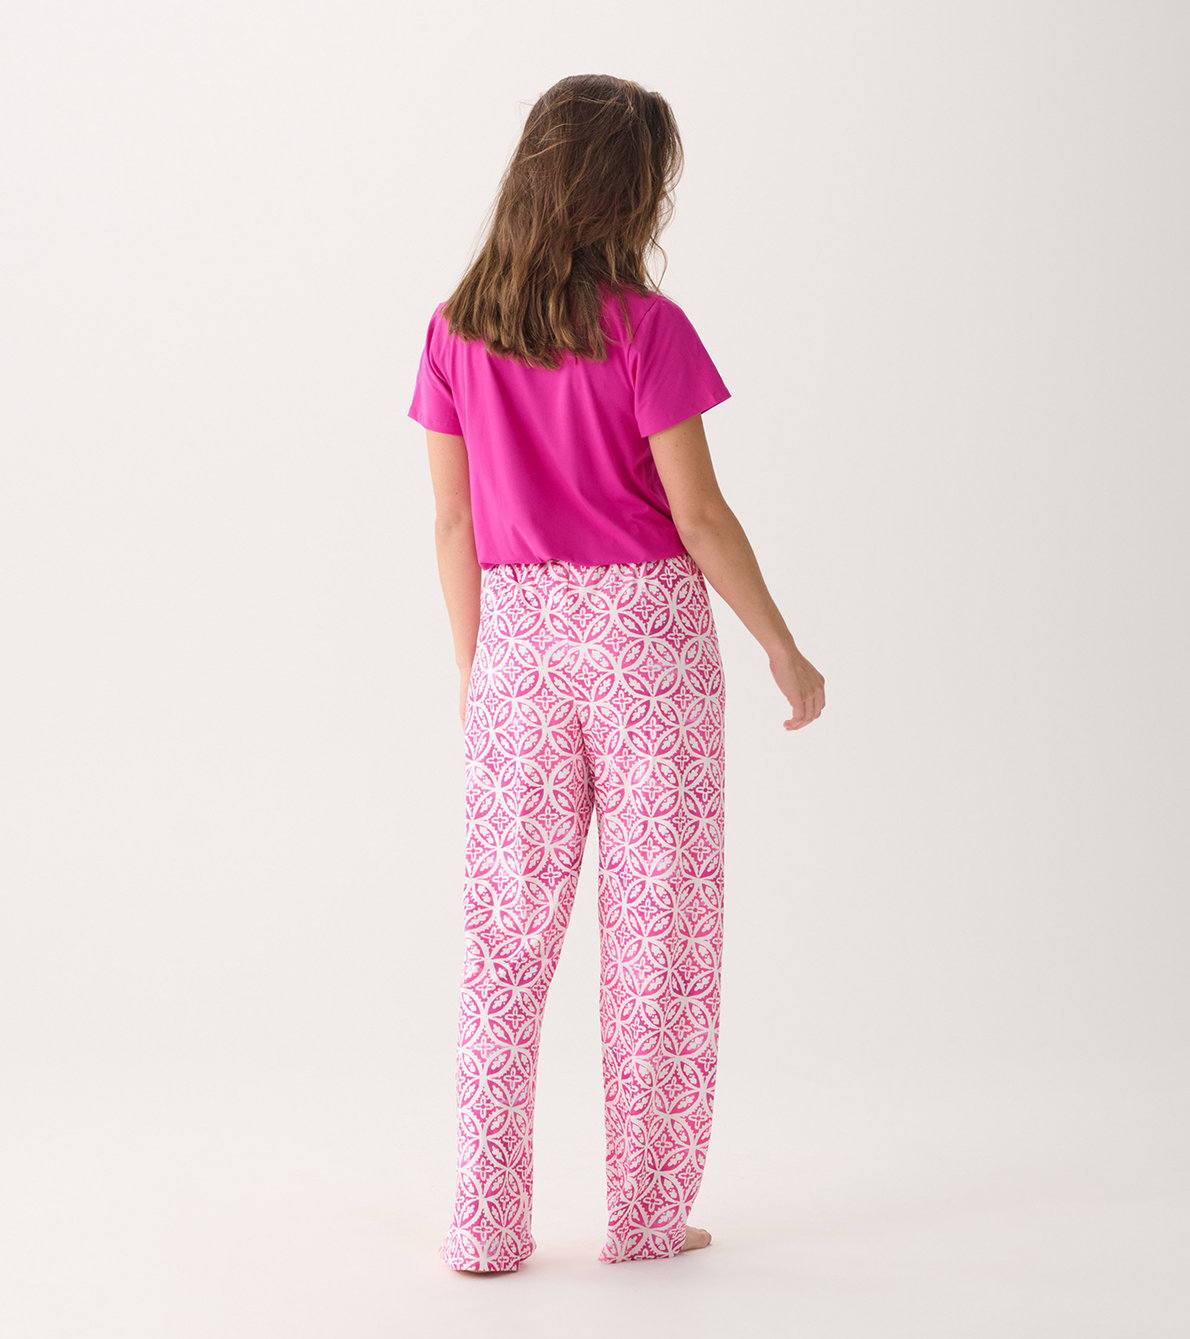 Agrandir l'image de Pantalon de pyjama et son sac – Lotus roses d’inspiration mandala